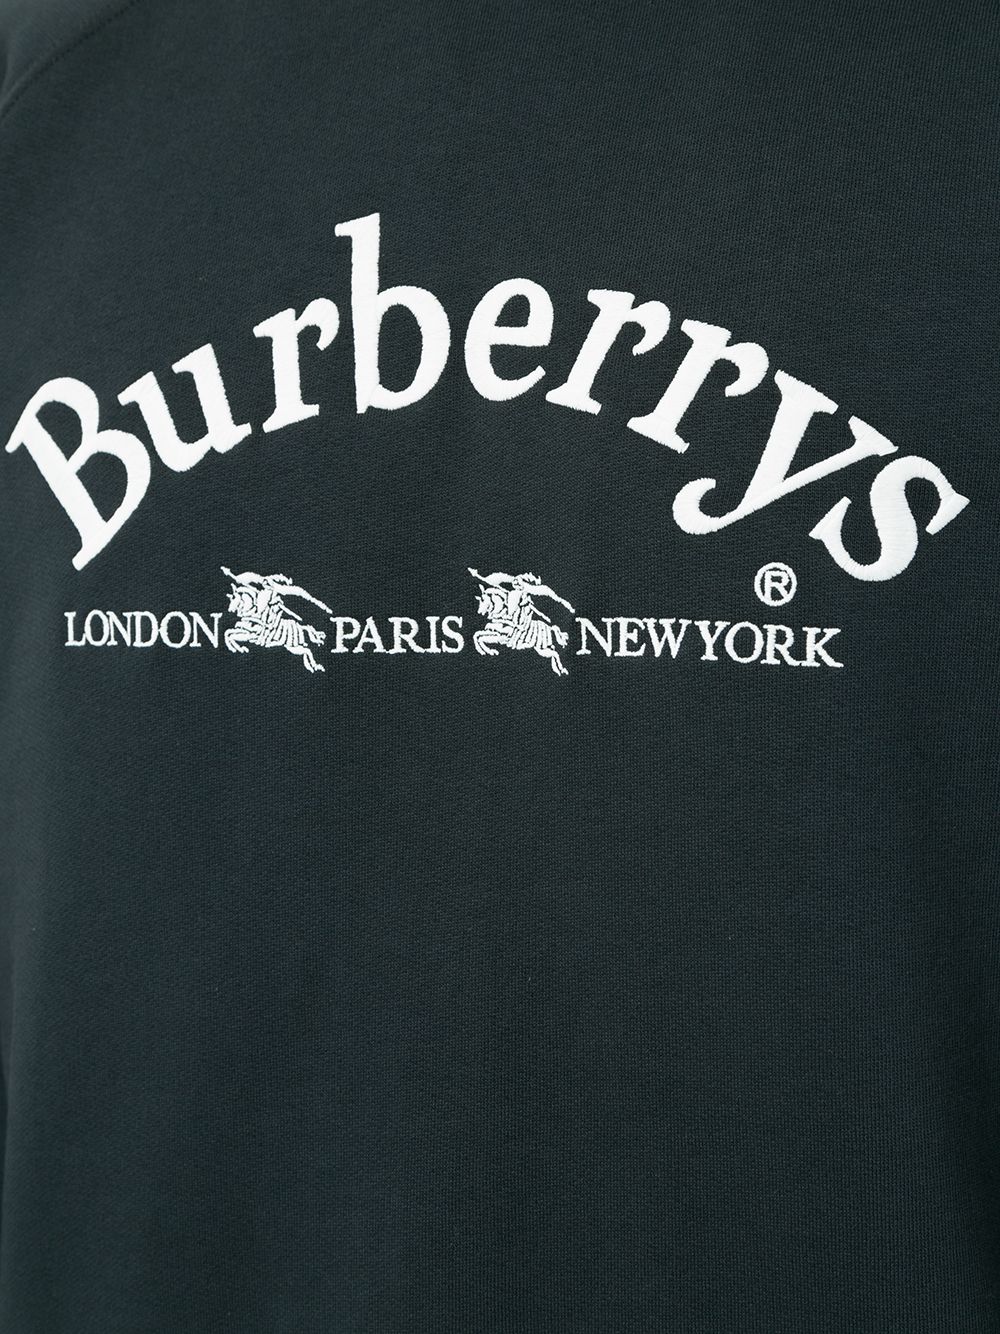 burberrys london paris new york \u003e Up to 